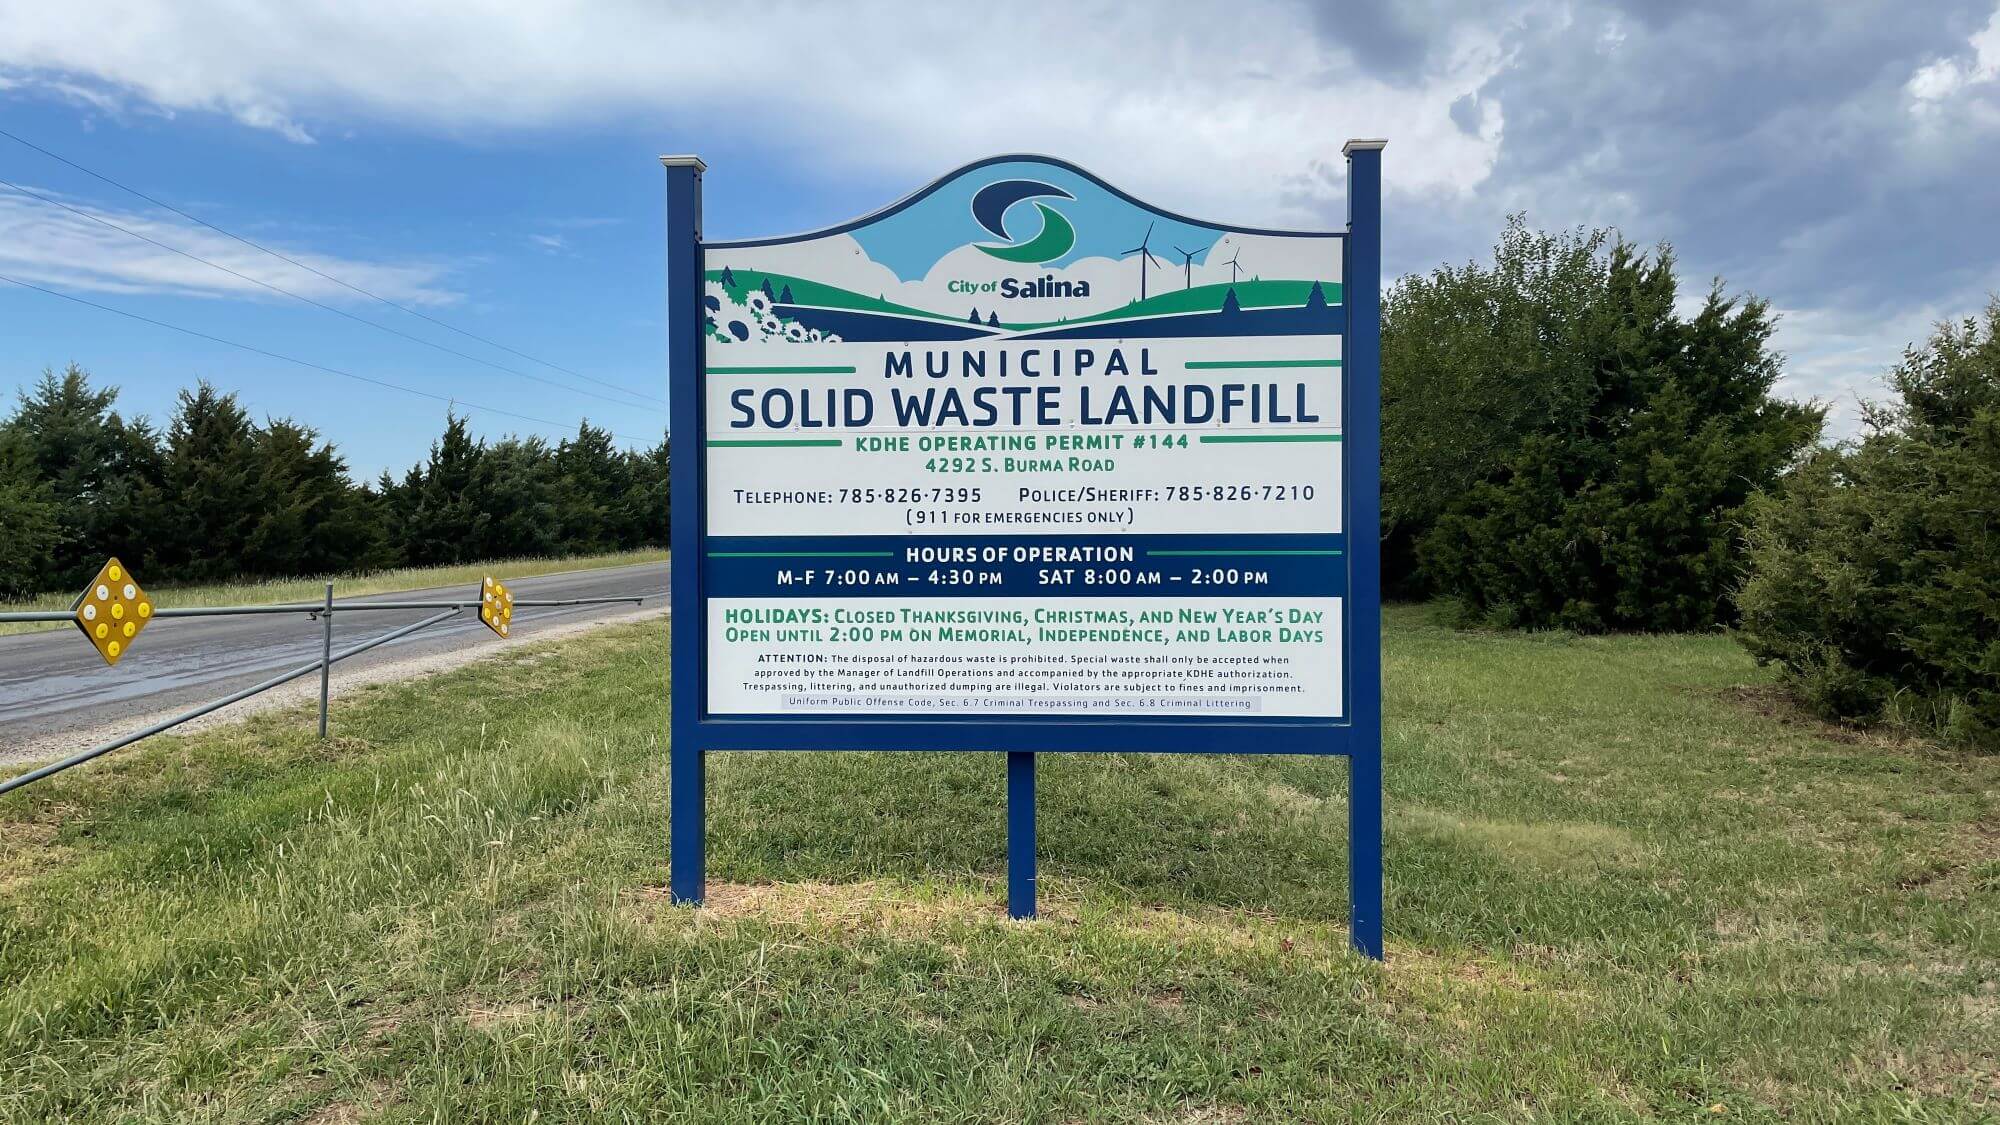 Additional Photos/Landfill Sign.jpg